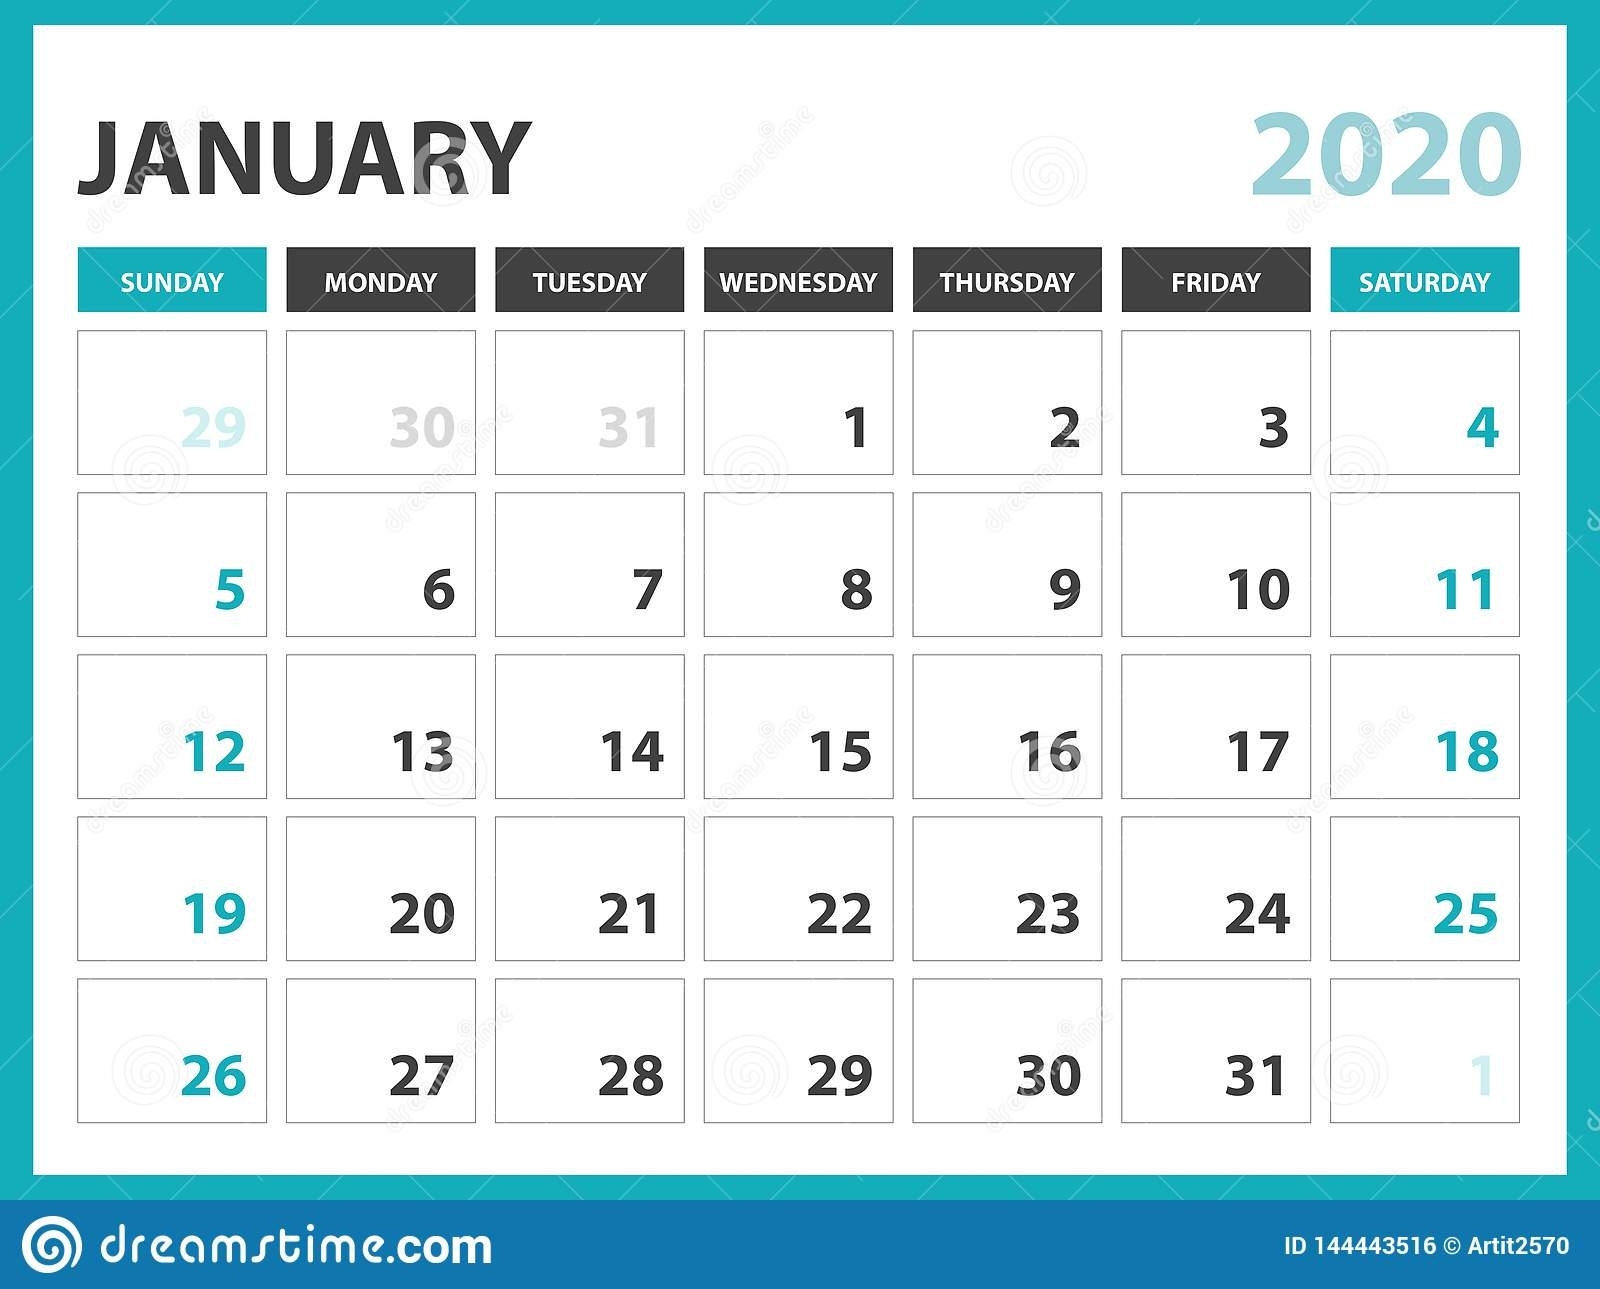 Desk Calendar Layout Size 8 X 6 Inch, January 2020 Calendar Free 8 Week Calendar Template